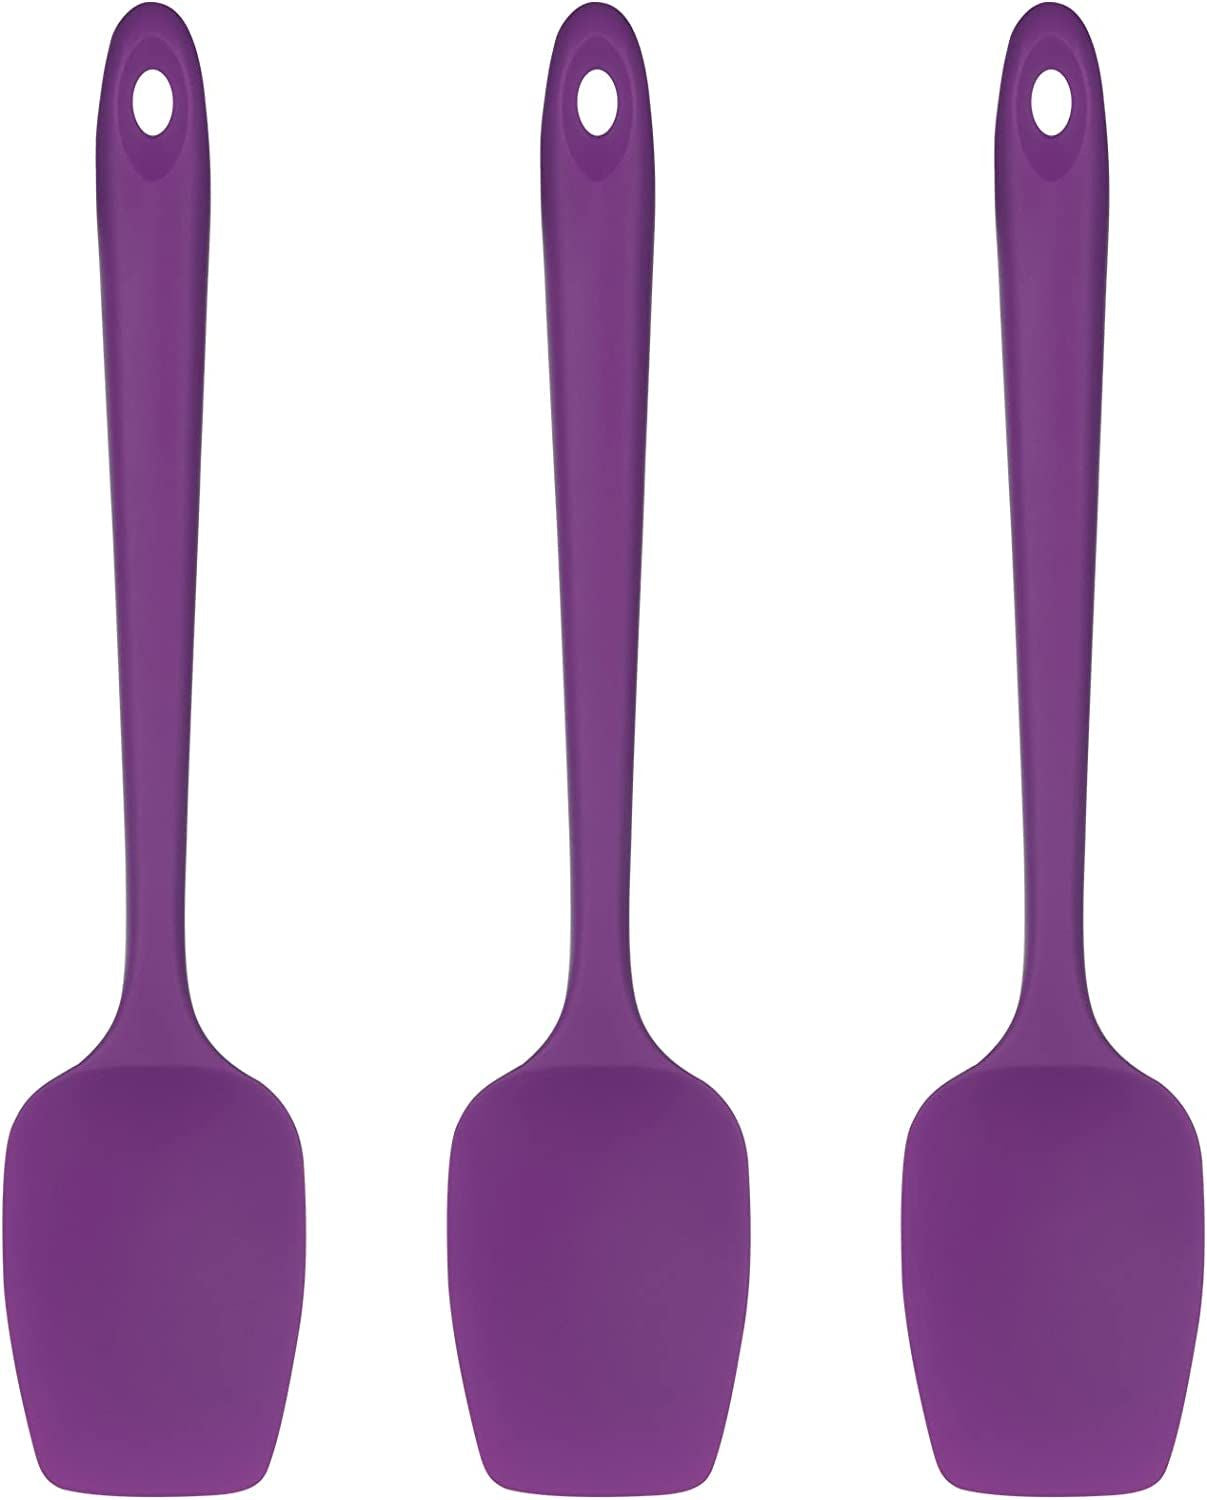 High Heat Resistant Spoon Spatula Set of 3